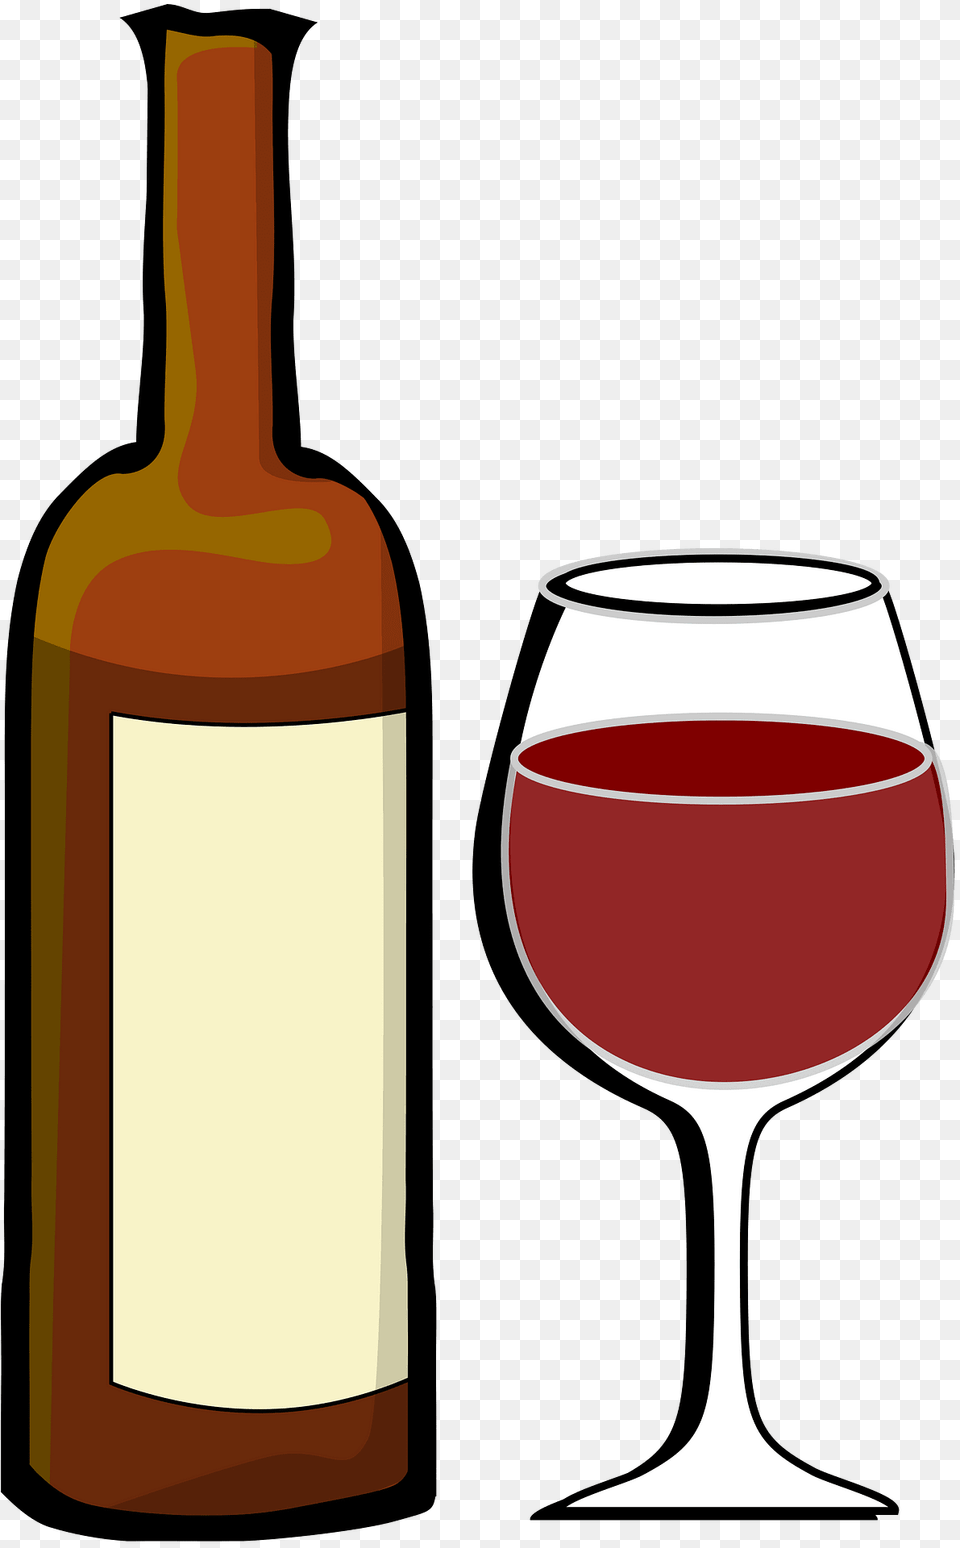 Wine Bottle And Glass Clipart, Alcohol, Beverage, Wine Bottle, Liquor Free Transparent Png